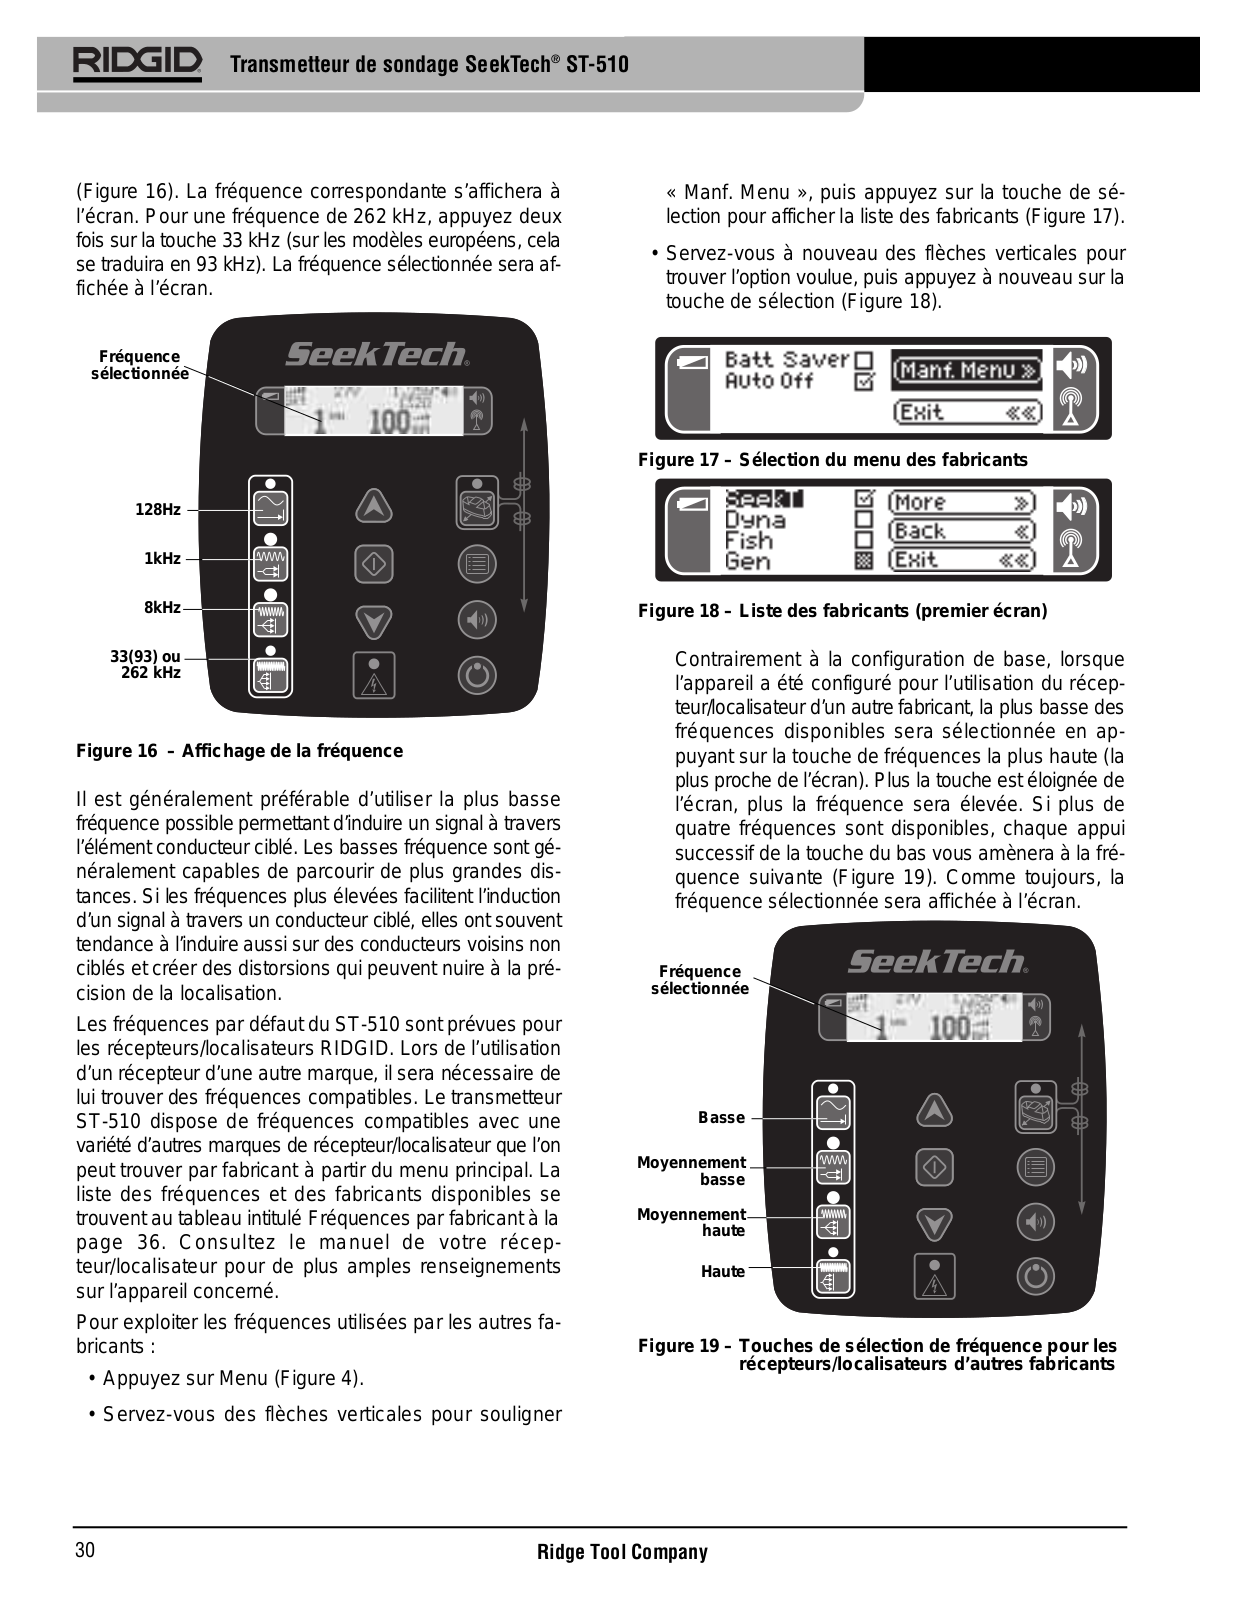 RIDGID SeekTech ST-510 User Manual